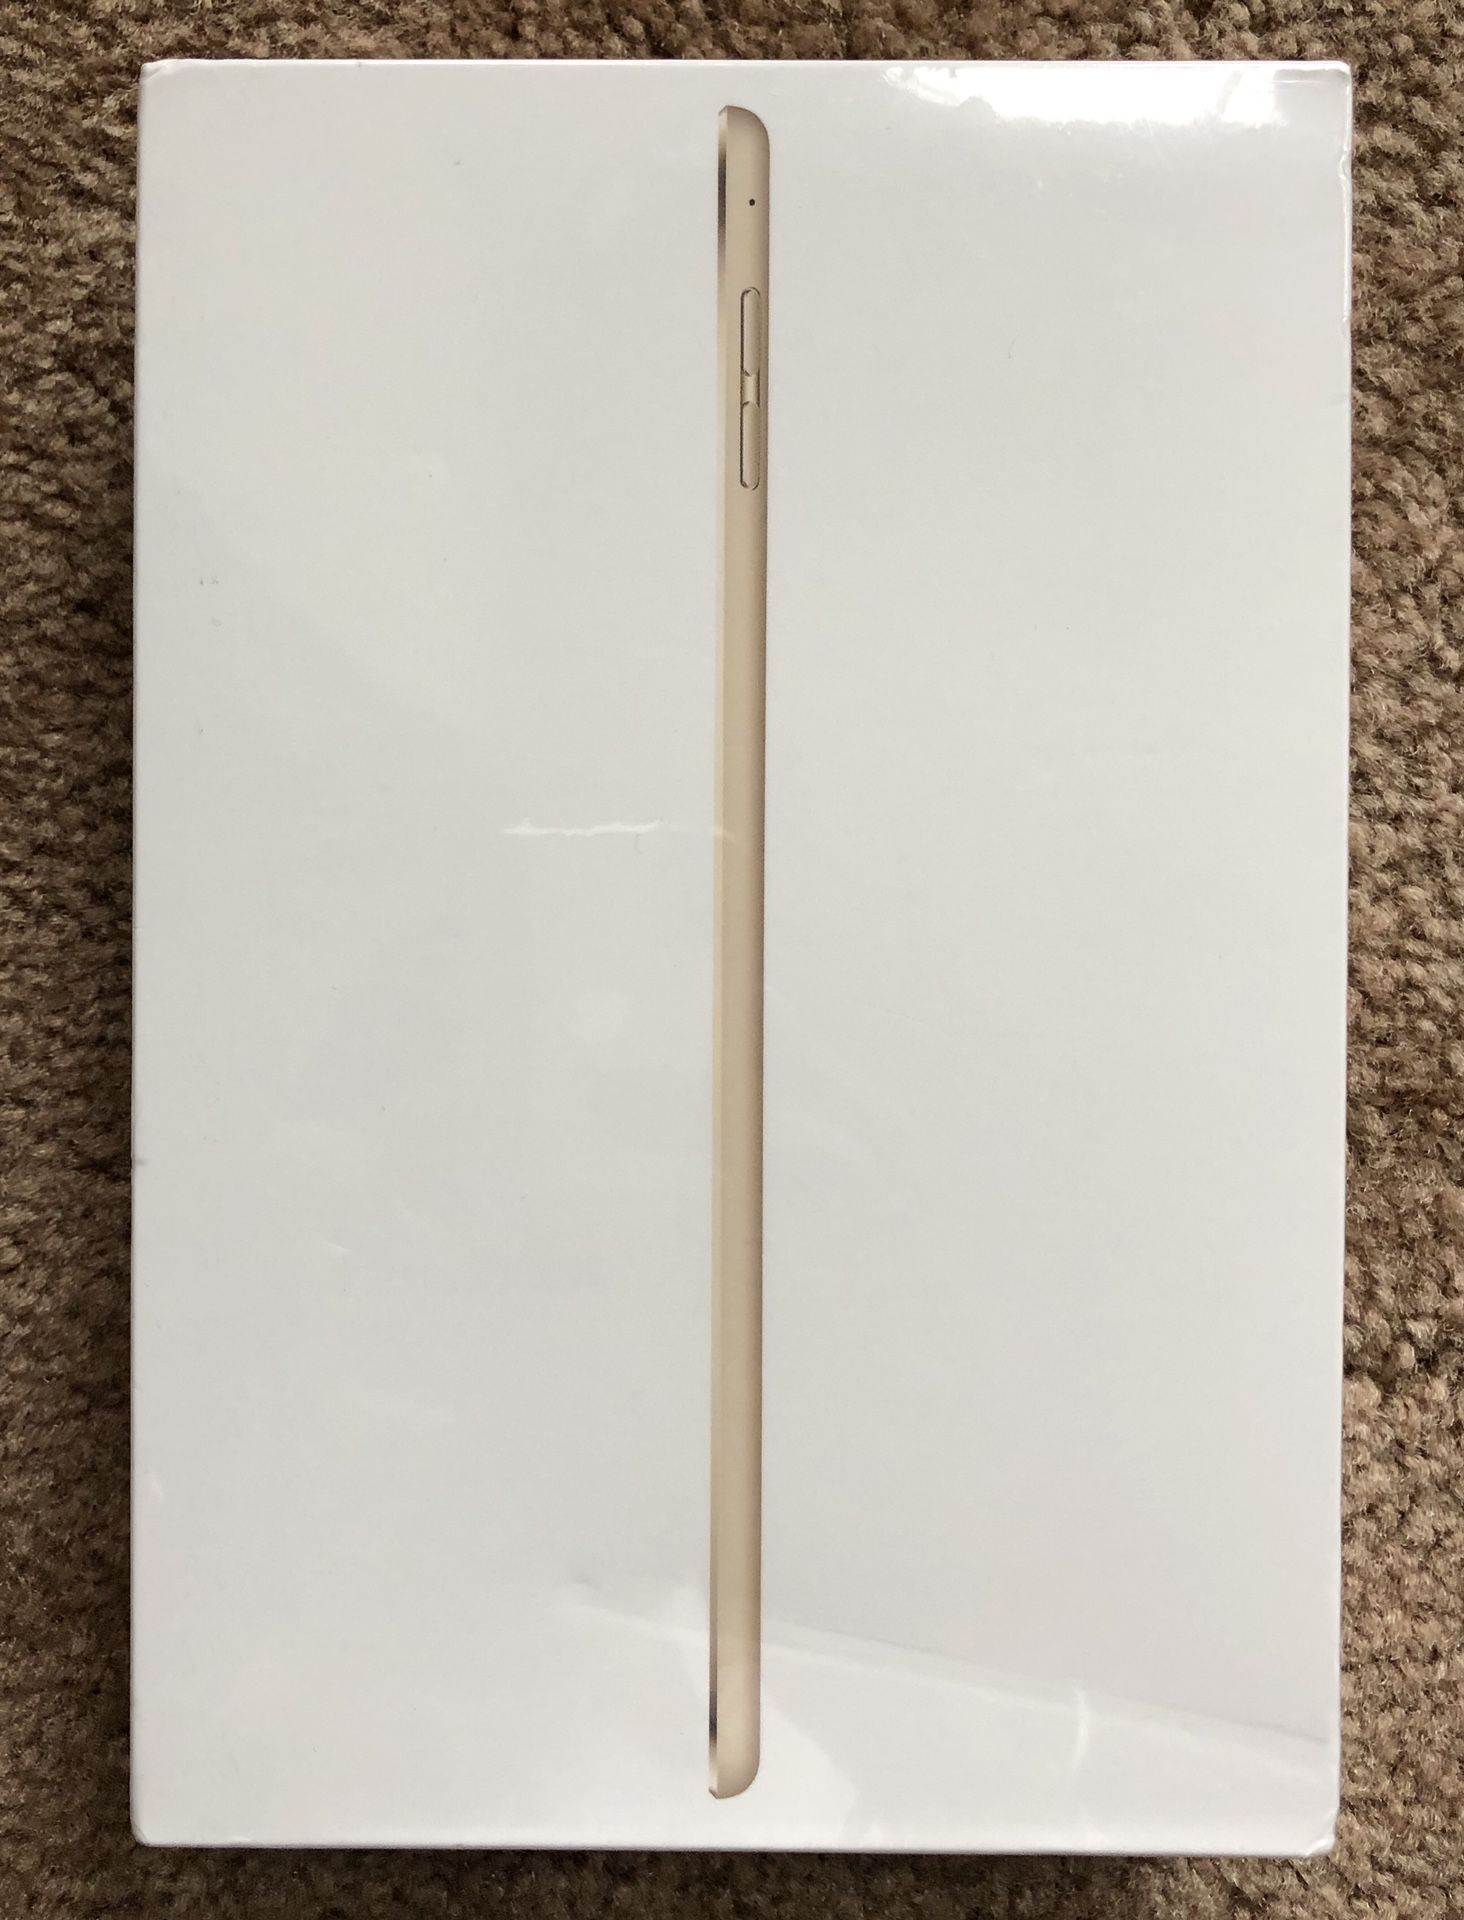 iPad 4 Mini Brand New, Never opened